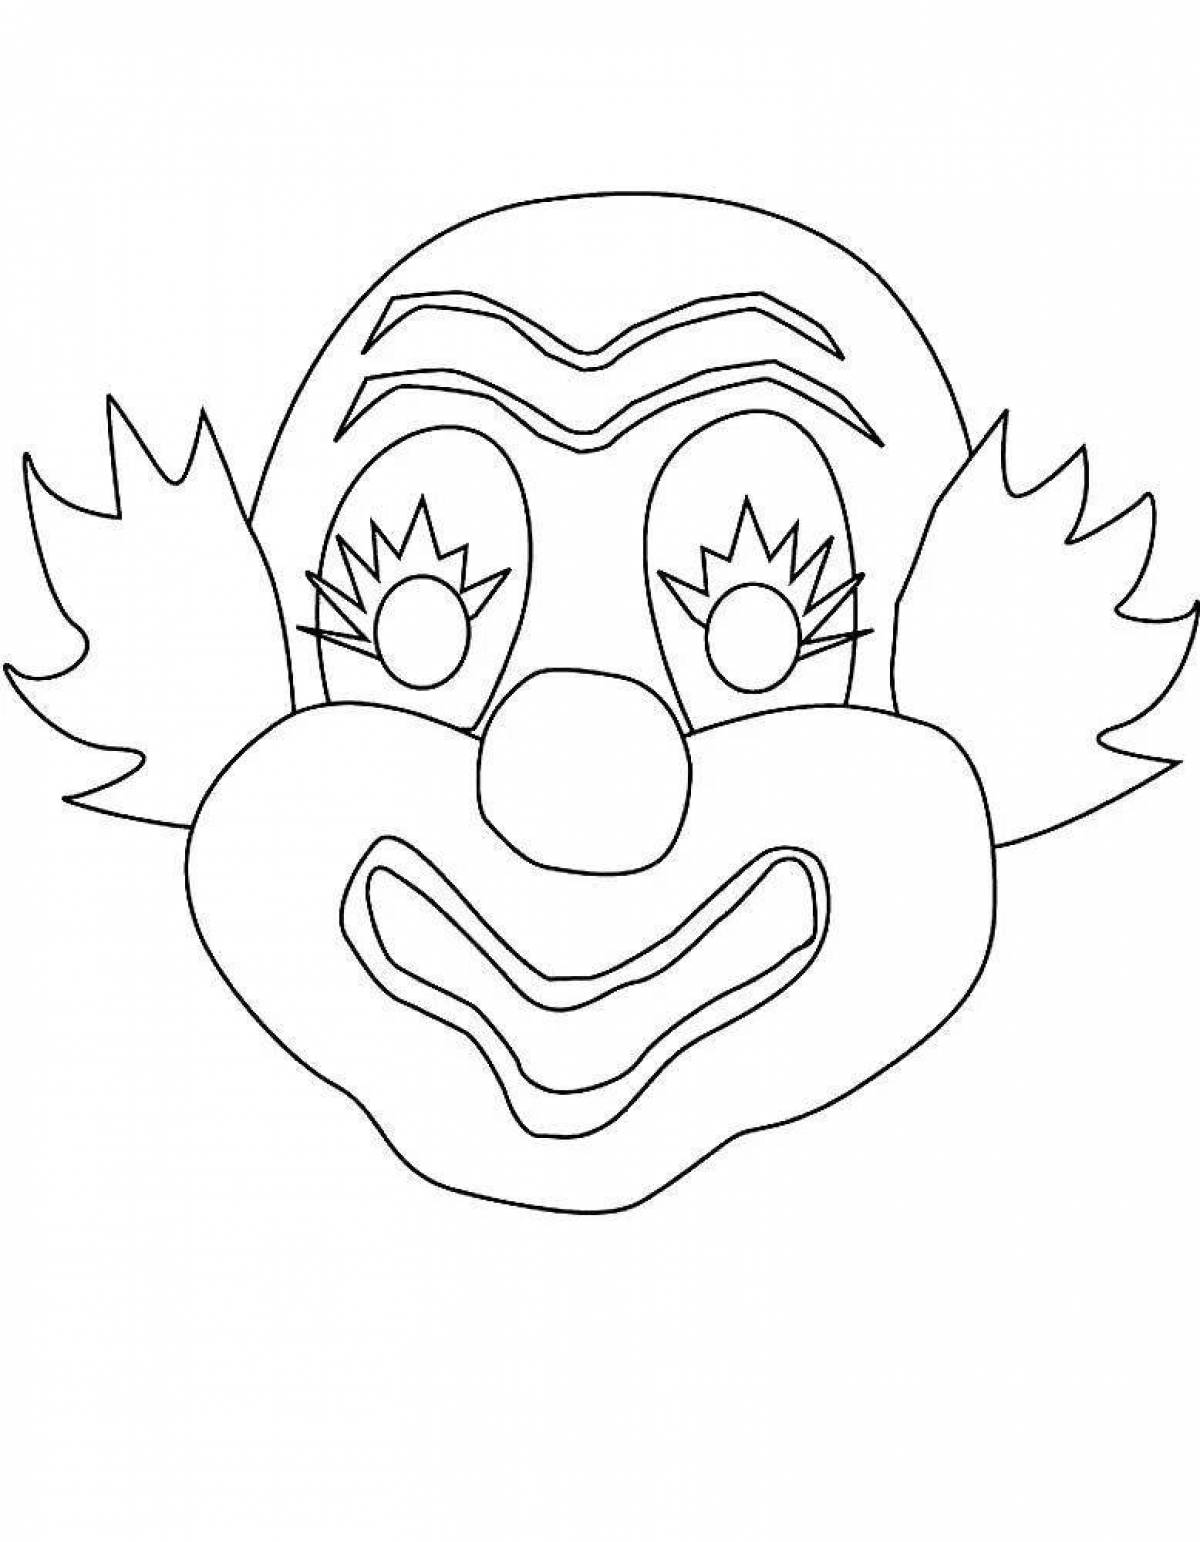 Изысканная страница раскраски лица клоуна